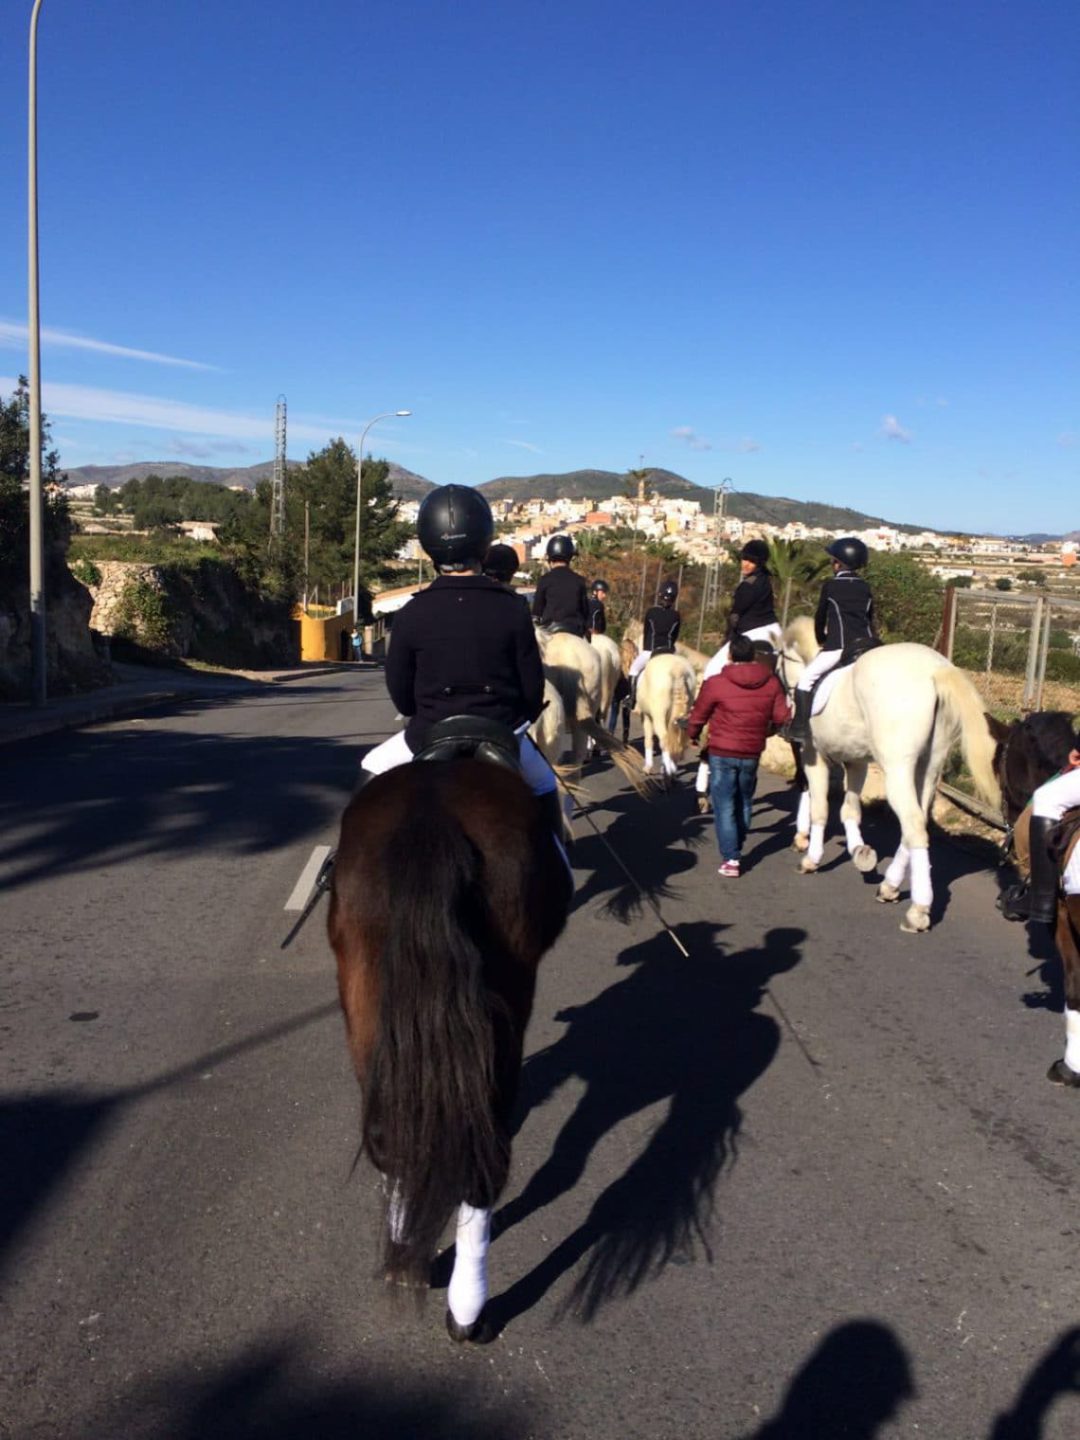 “Cañada del Sol” Equestrian center at San Antonio’s Day in Benitachell.